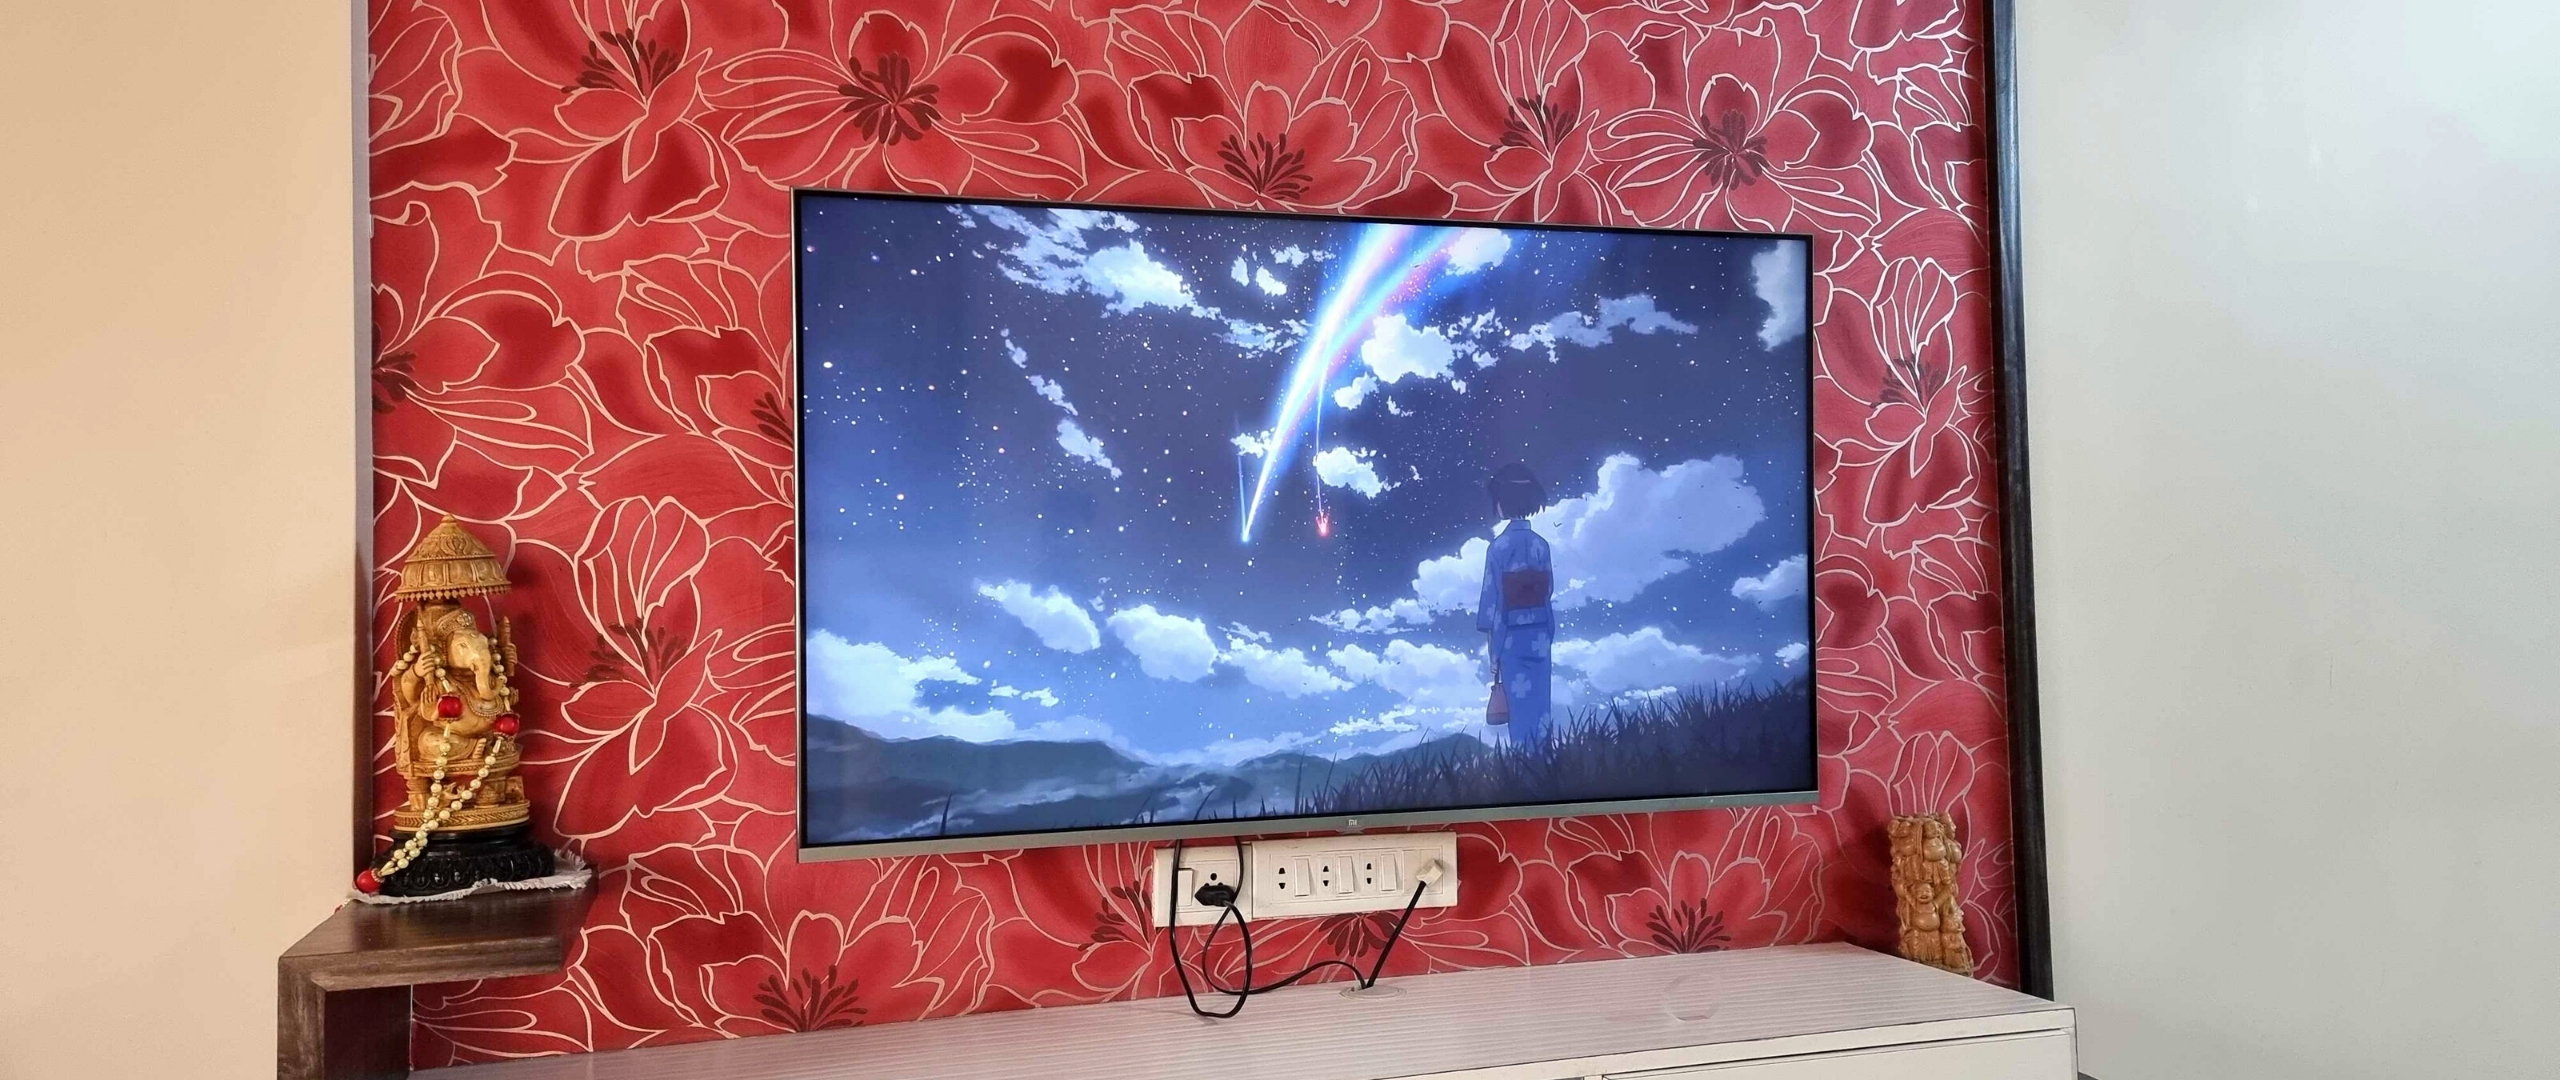 Xiaomi TV A 55